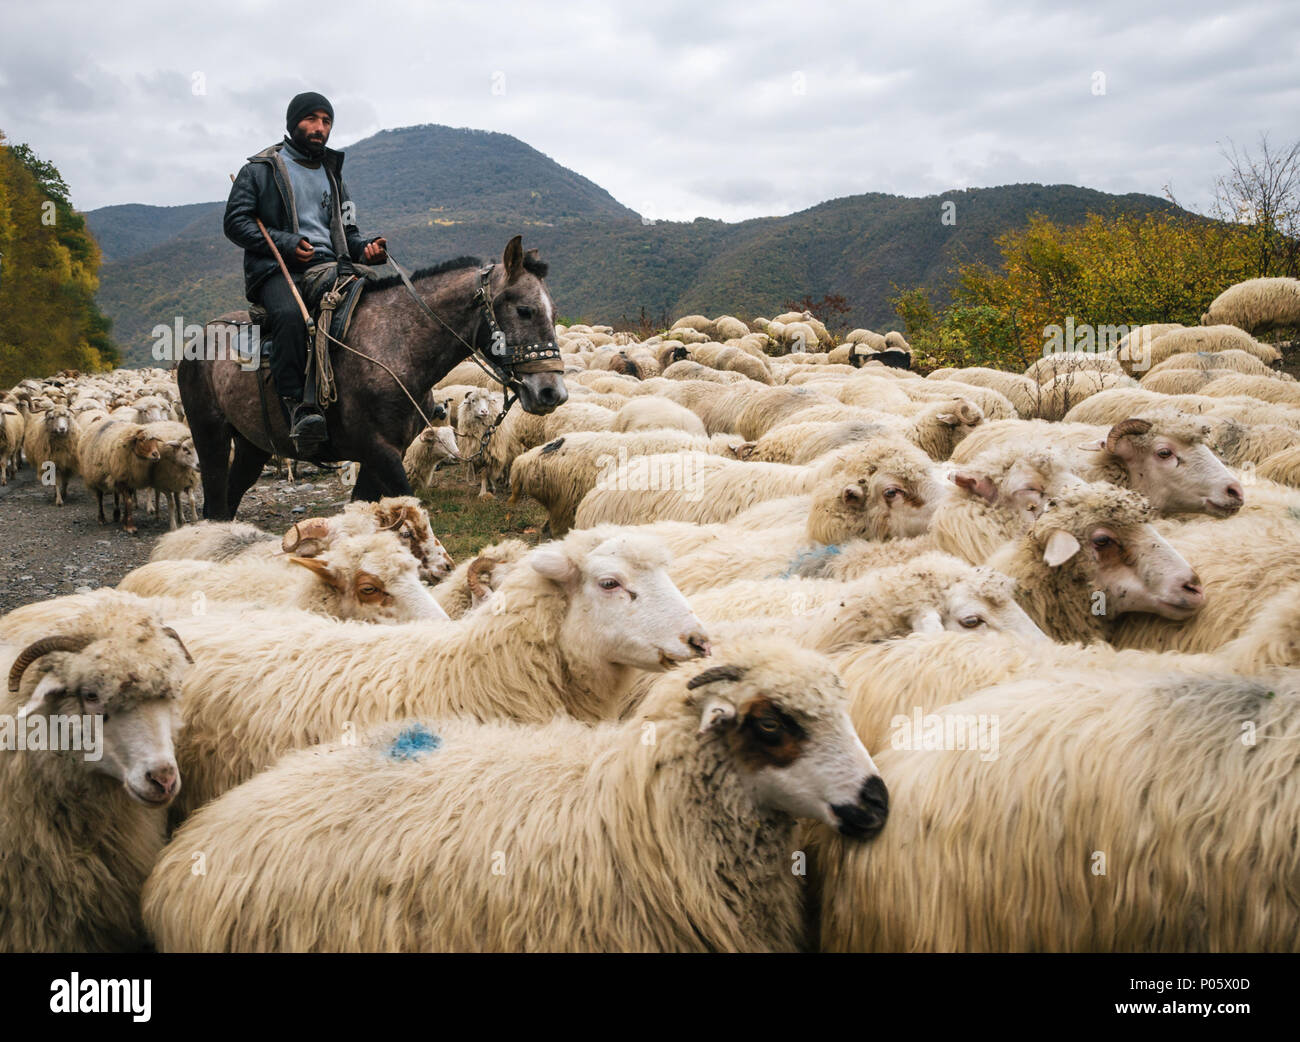 Zhinvali village, Mtskheta-Mtianeti, Georgia - October 21, 2016: Shepherd with crook riding a horse and herding a group of sheep Stock Photo